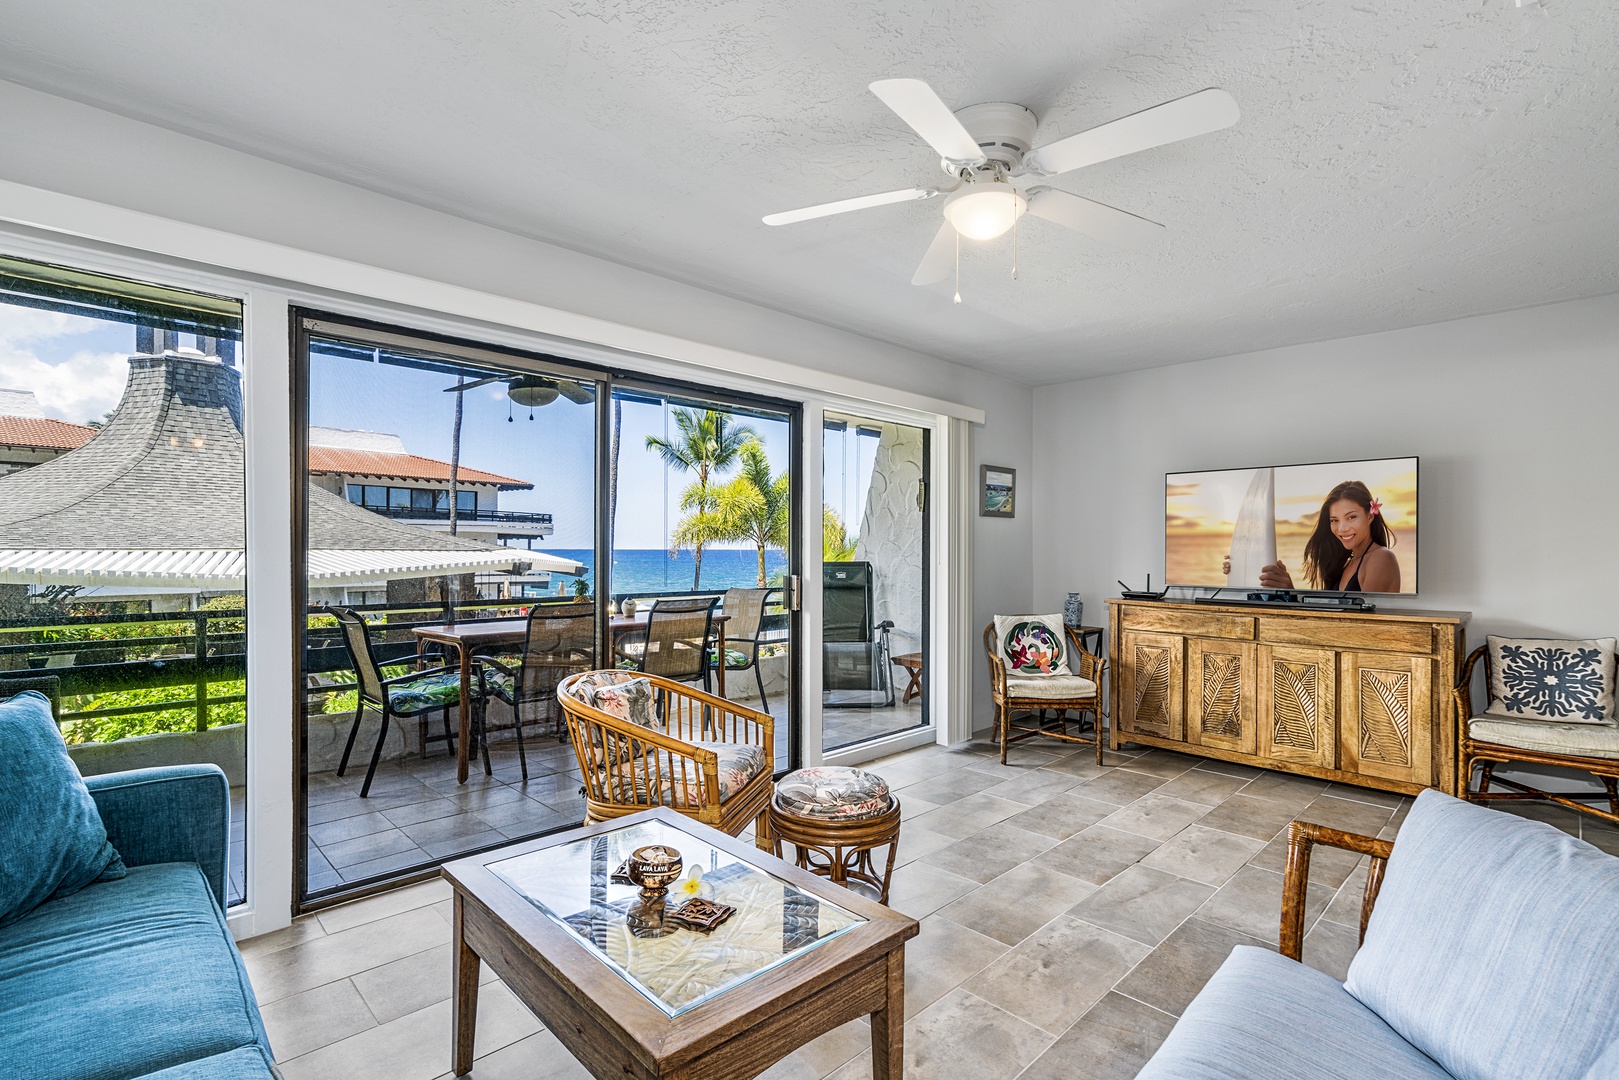 Kailua Kona Vacation Rentals, Casa De Emdeko 235 - Comfortable living room with central A/C and Smart TV